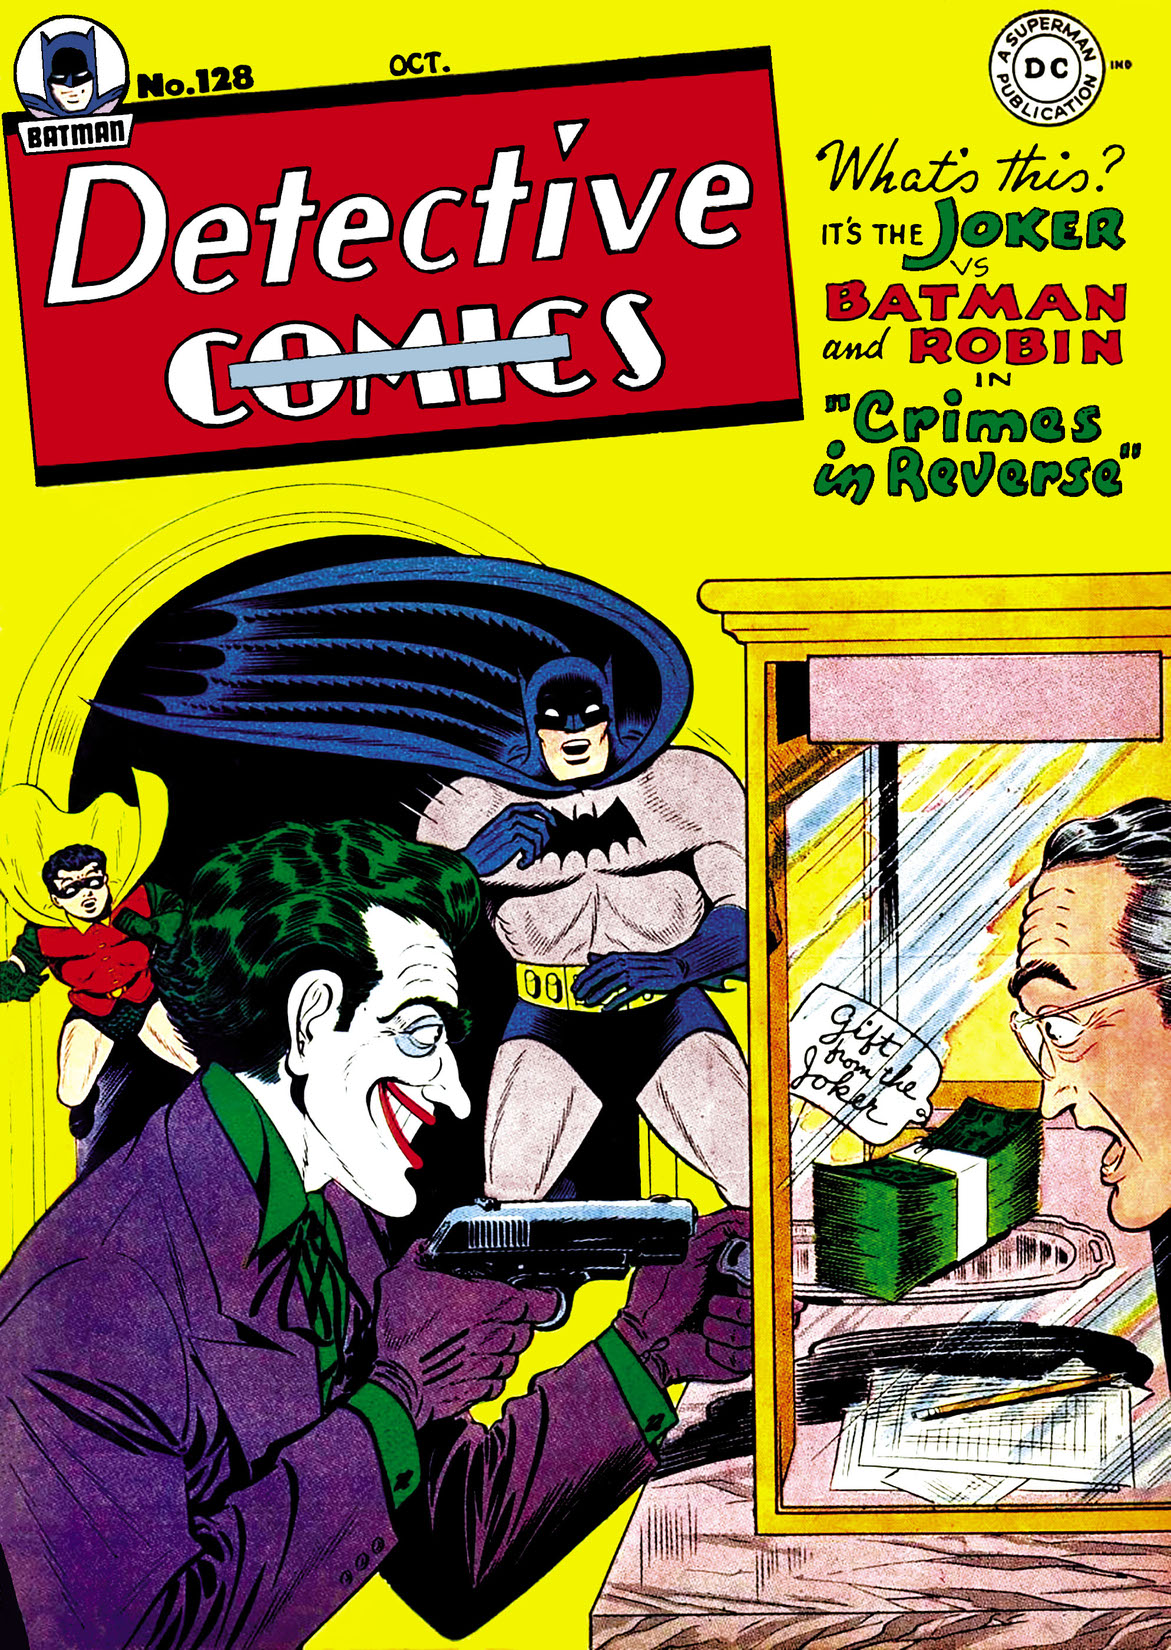 Detective Comics (1937-) #128 preview images